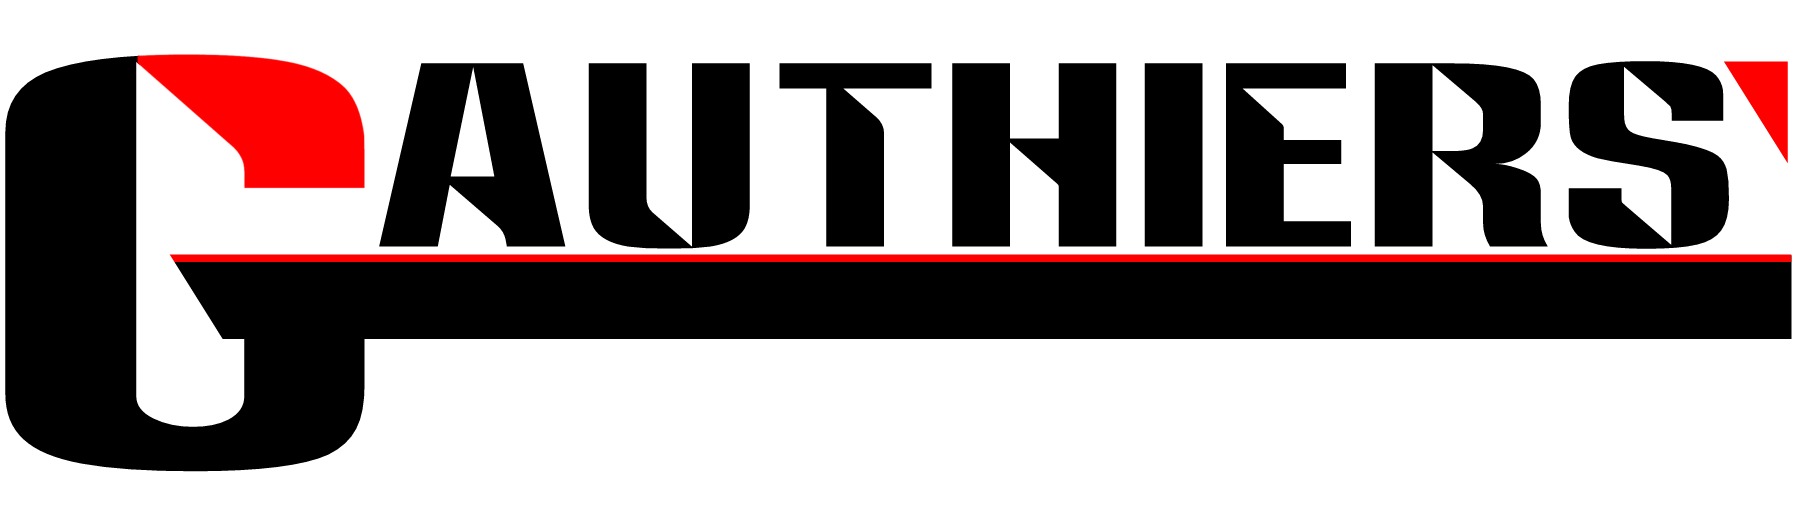 Gauthiers' Logo